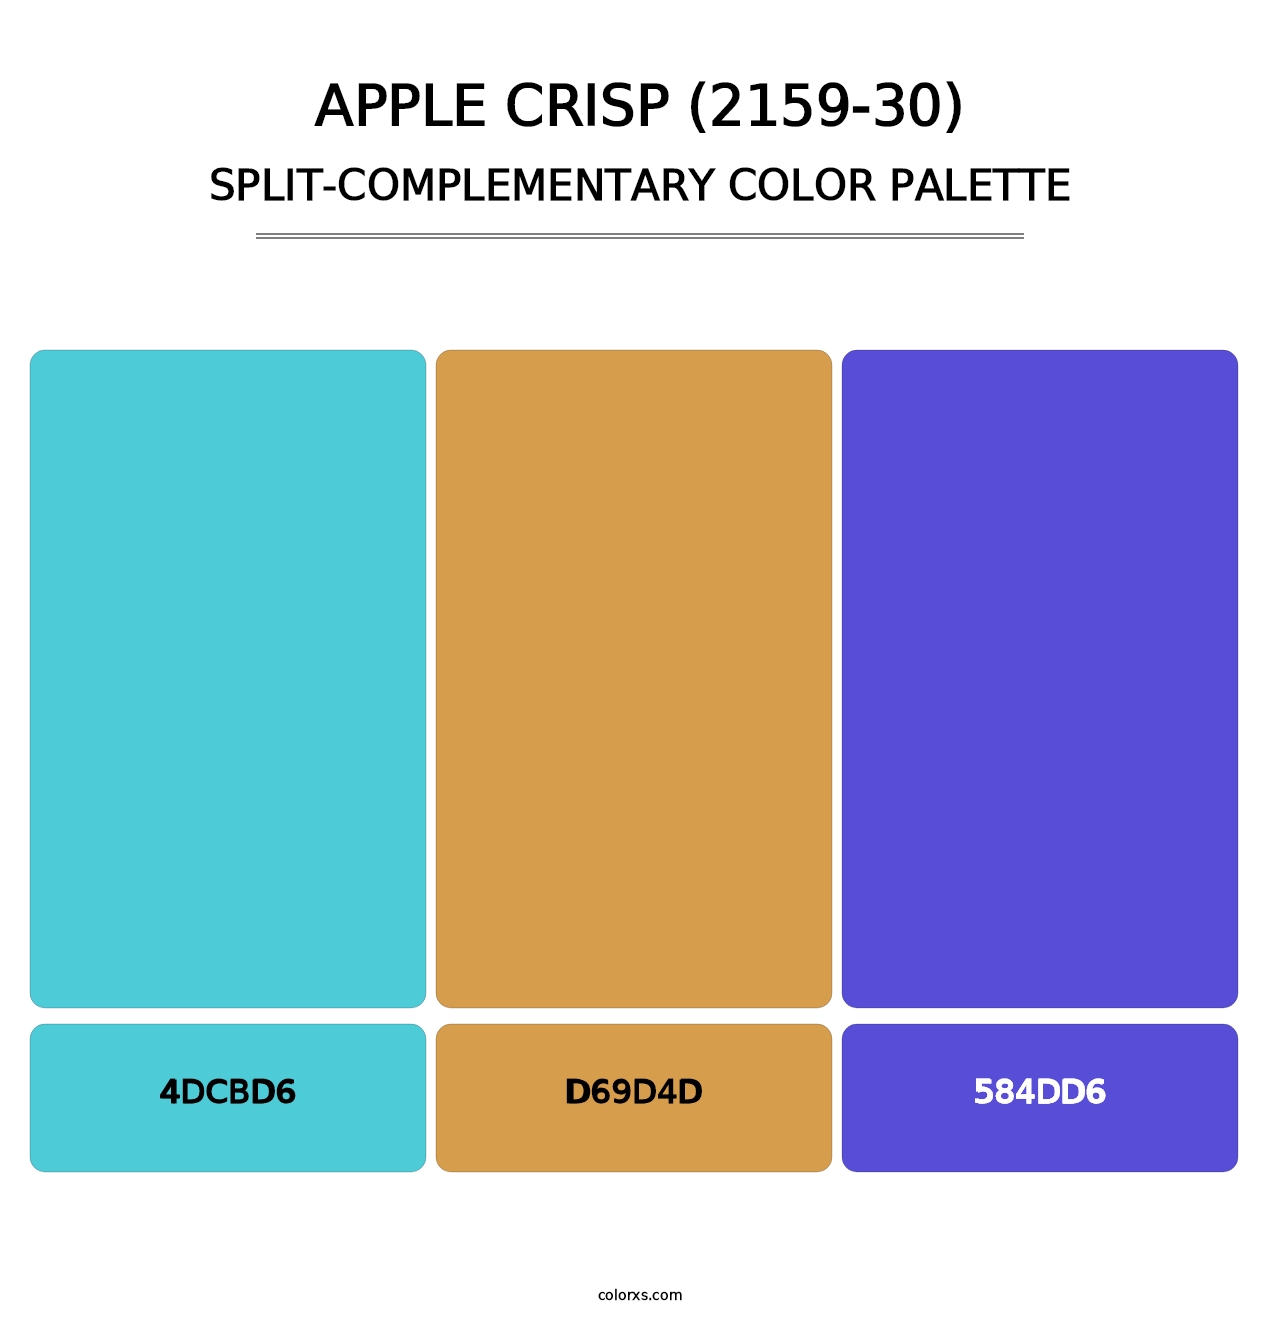 Apple Crisp (2159-30) - Split-Complementary Color Palette